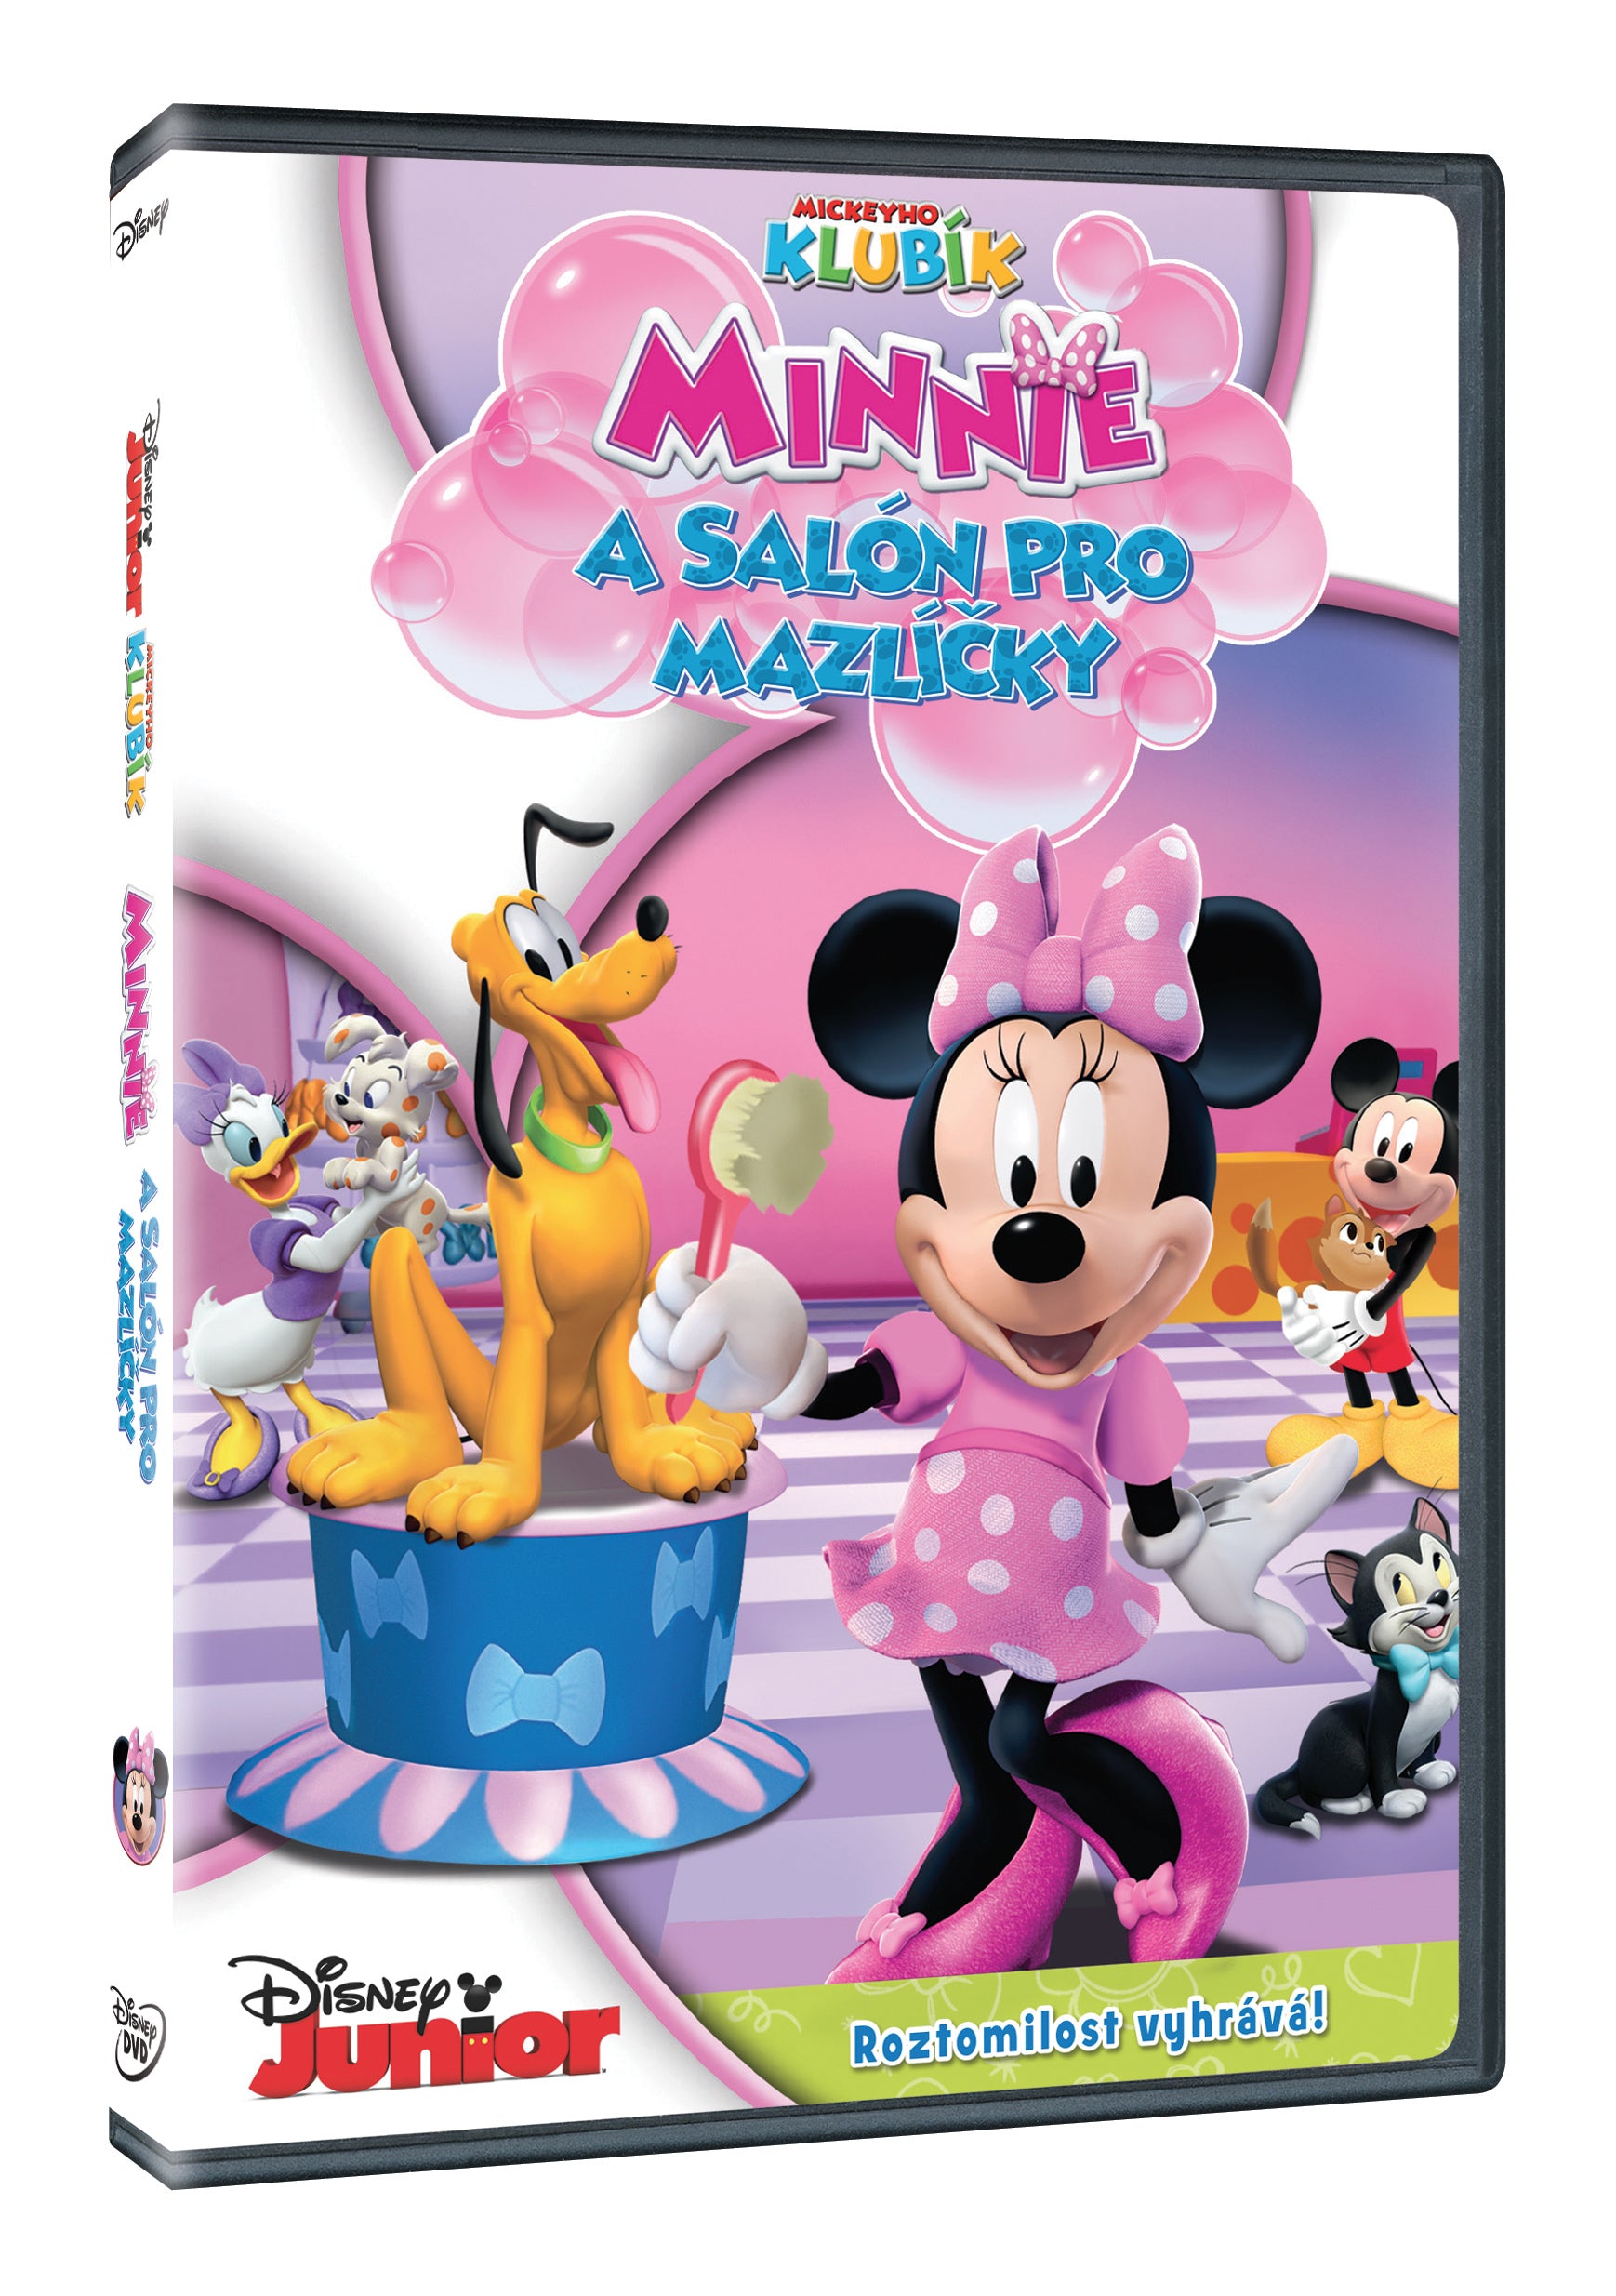 Mickeyho Club: Minnie a Salon pro mazlicky DVD / Mickey Mouse Clubhouse: Minnie's Pet Salon